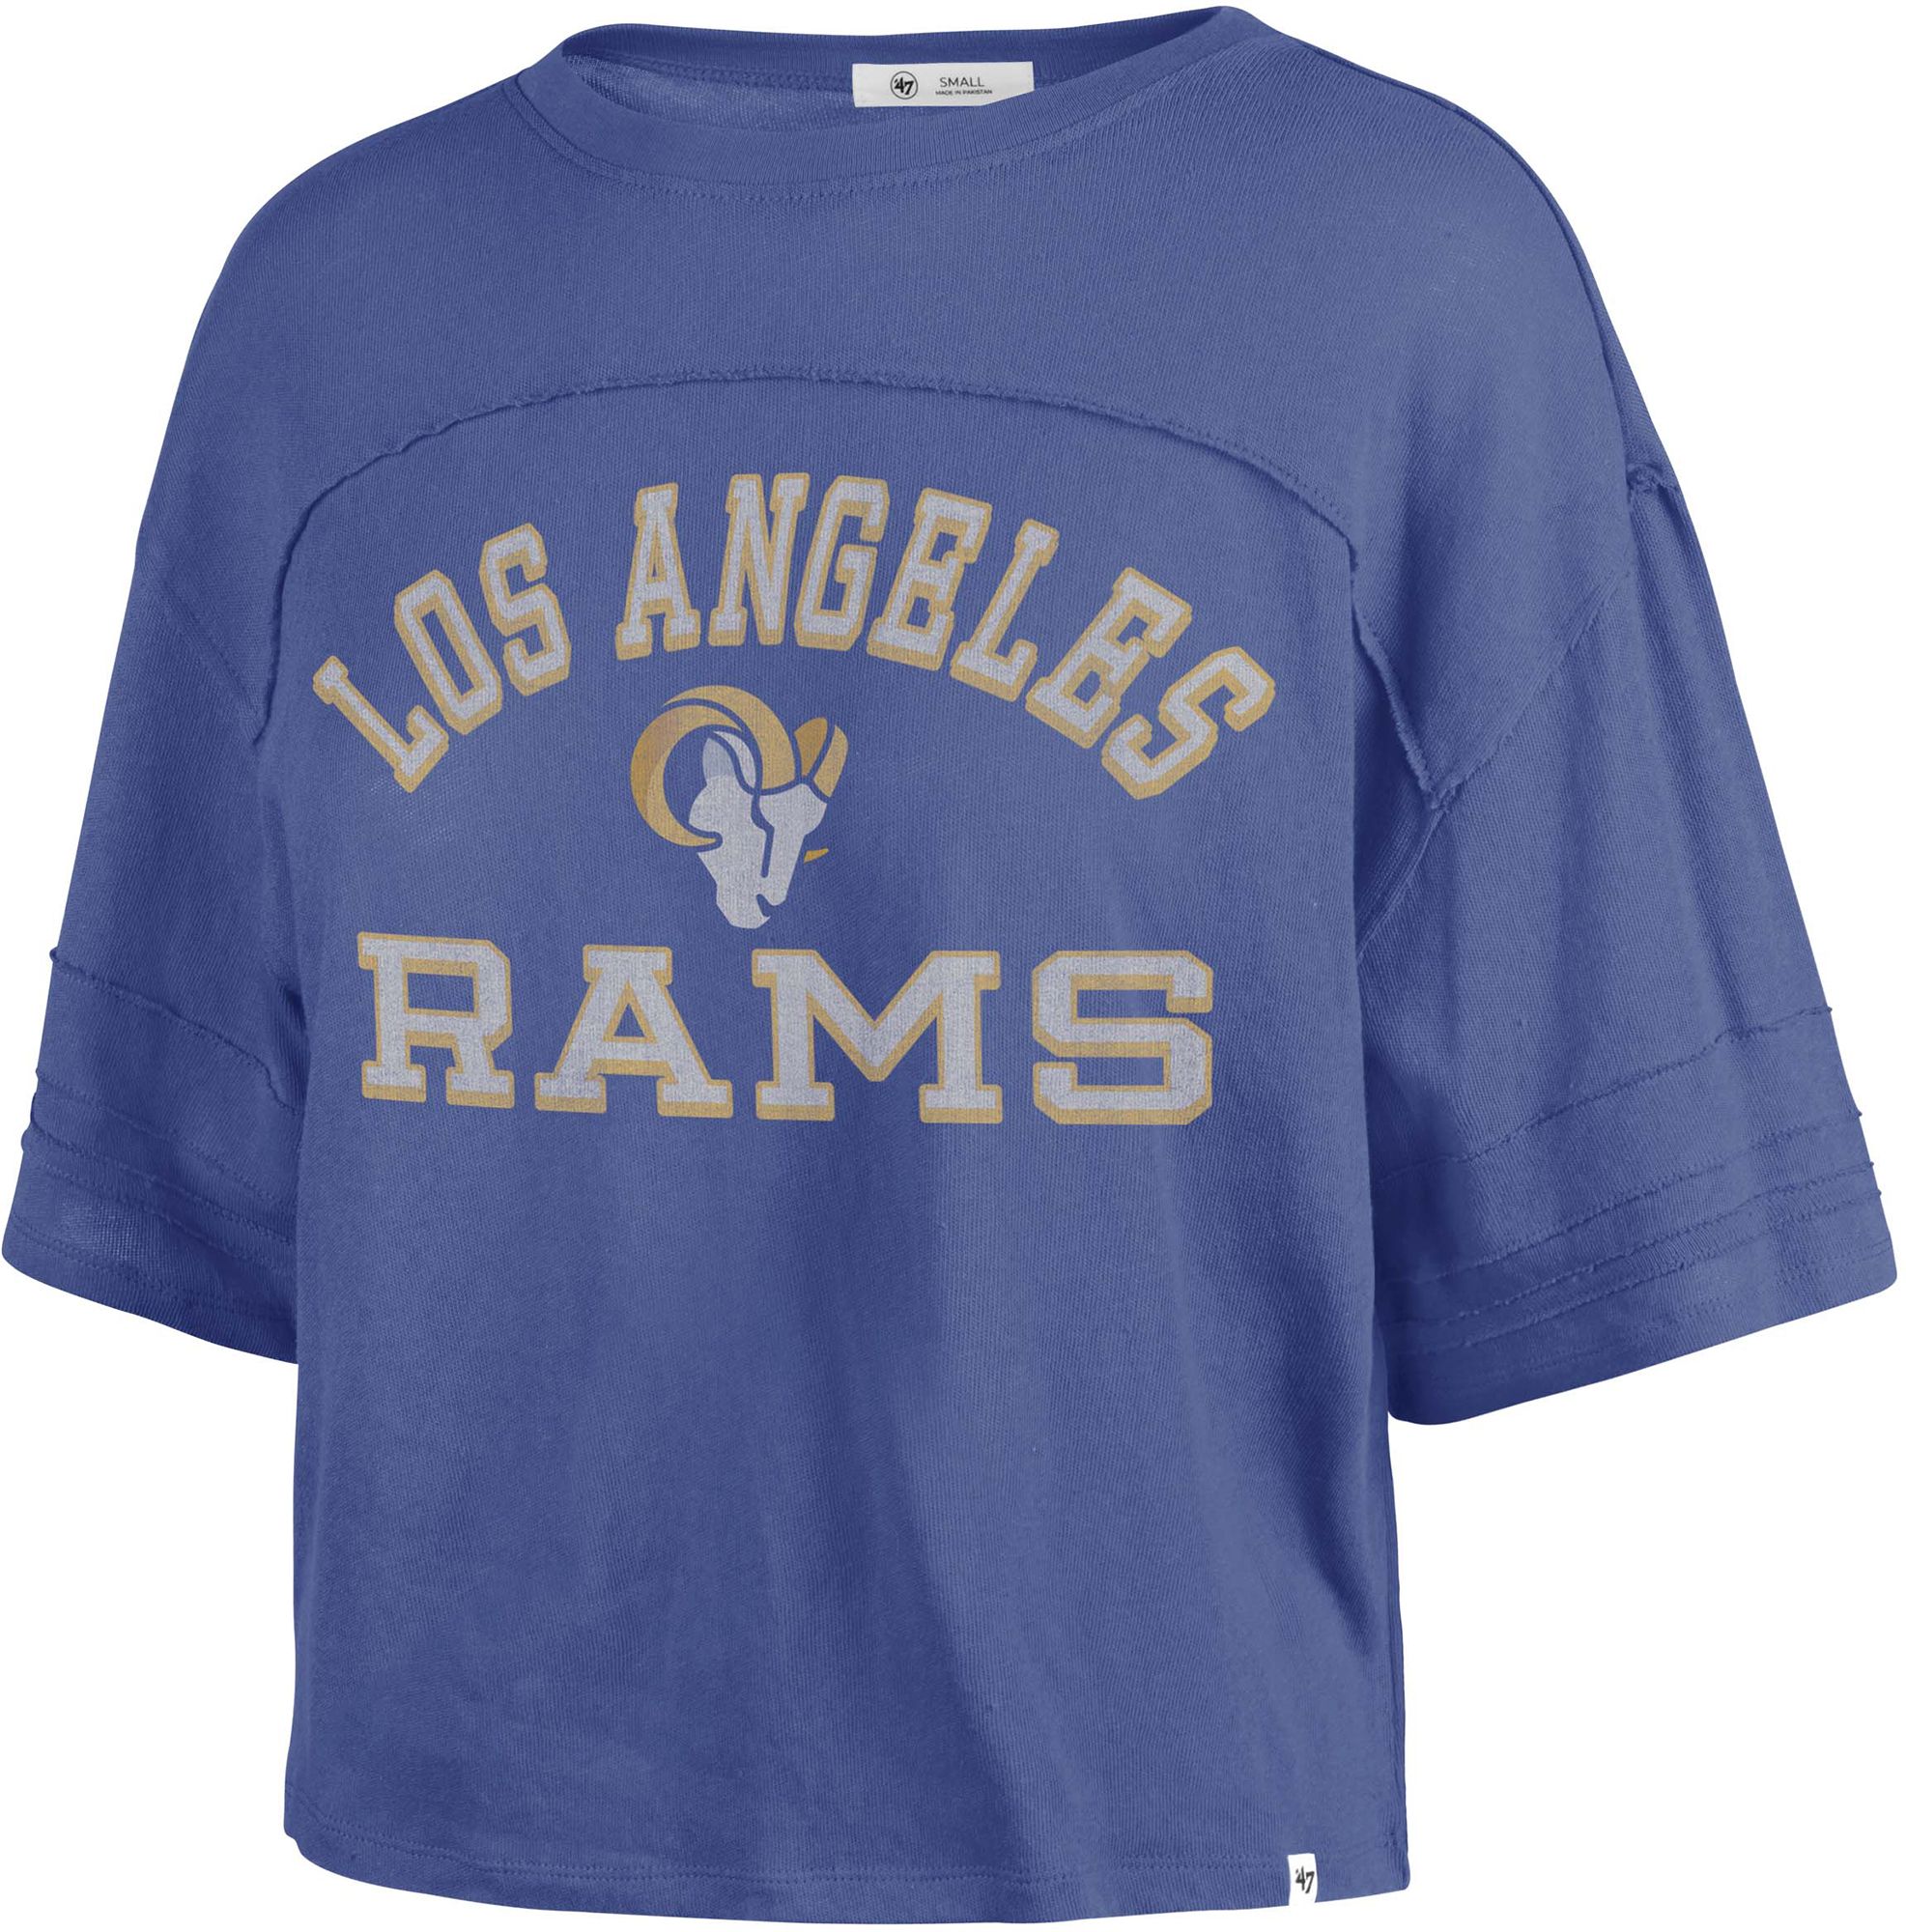 Los Angeles Rams Apparel, Rams Clothing & Gear